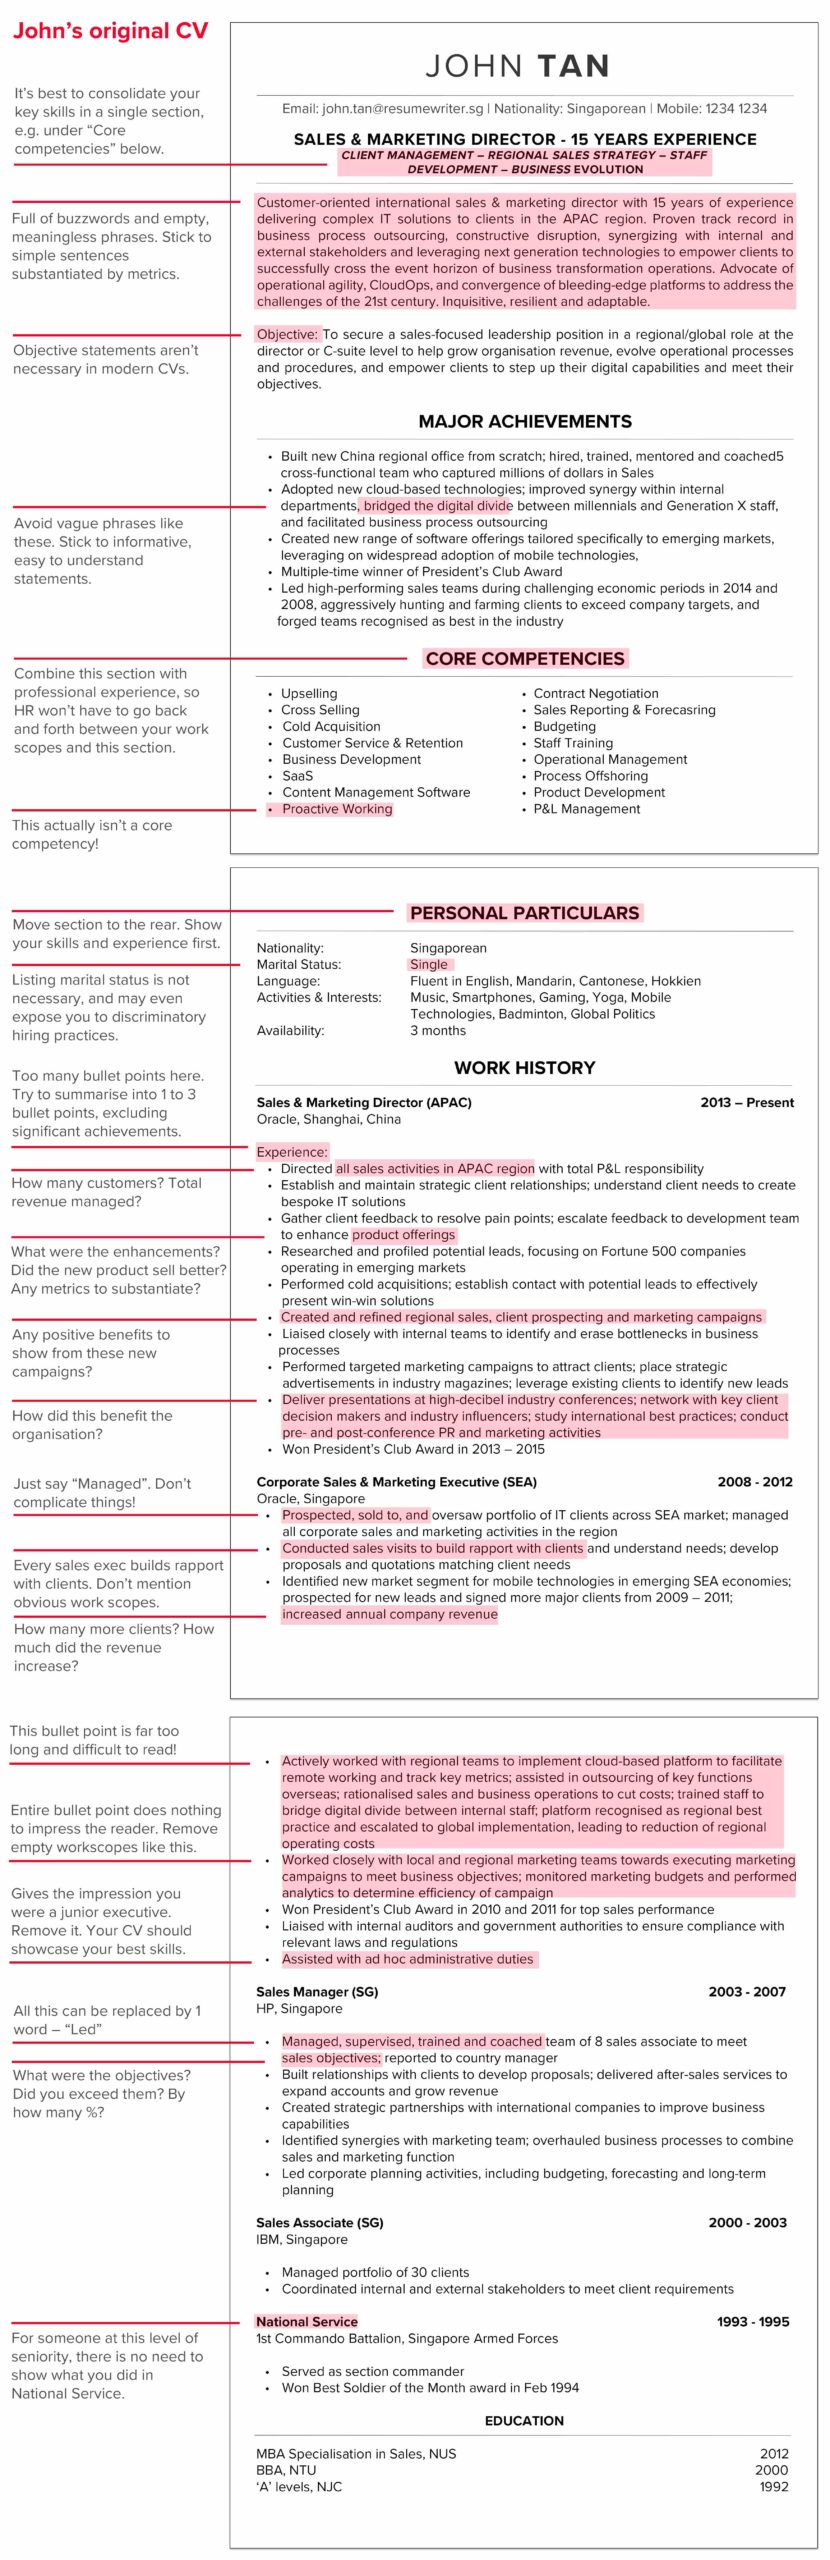 CV Annotated John S Original CV Red Min Scaled